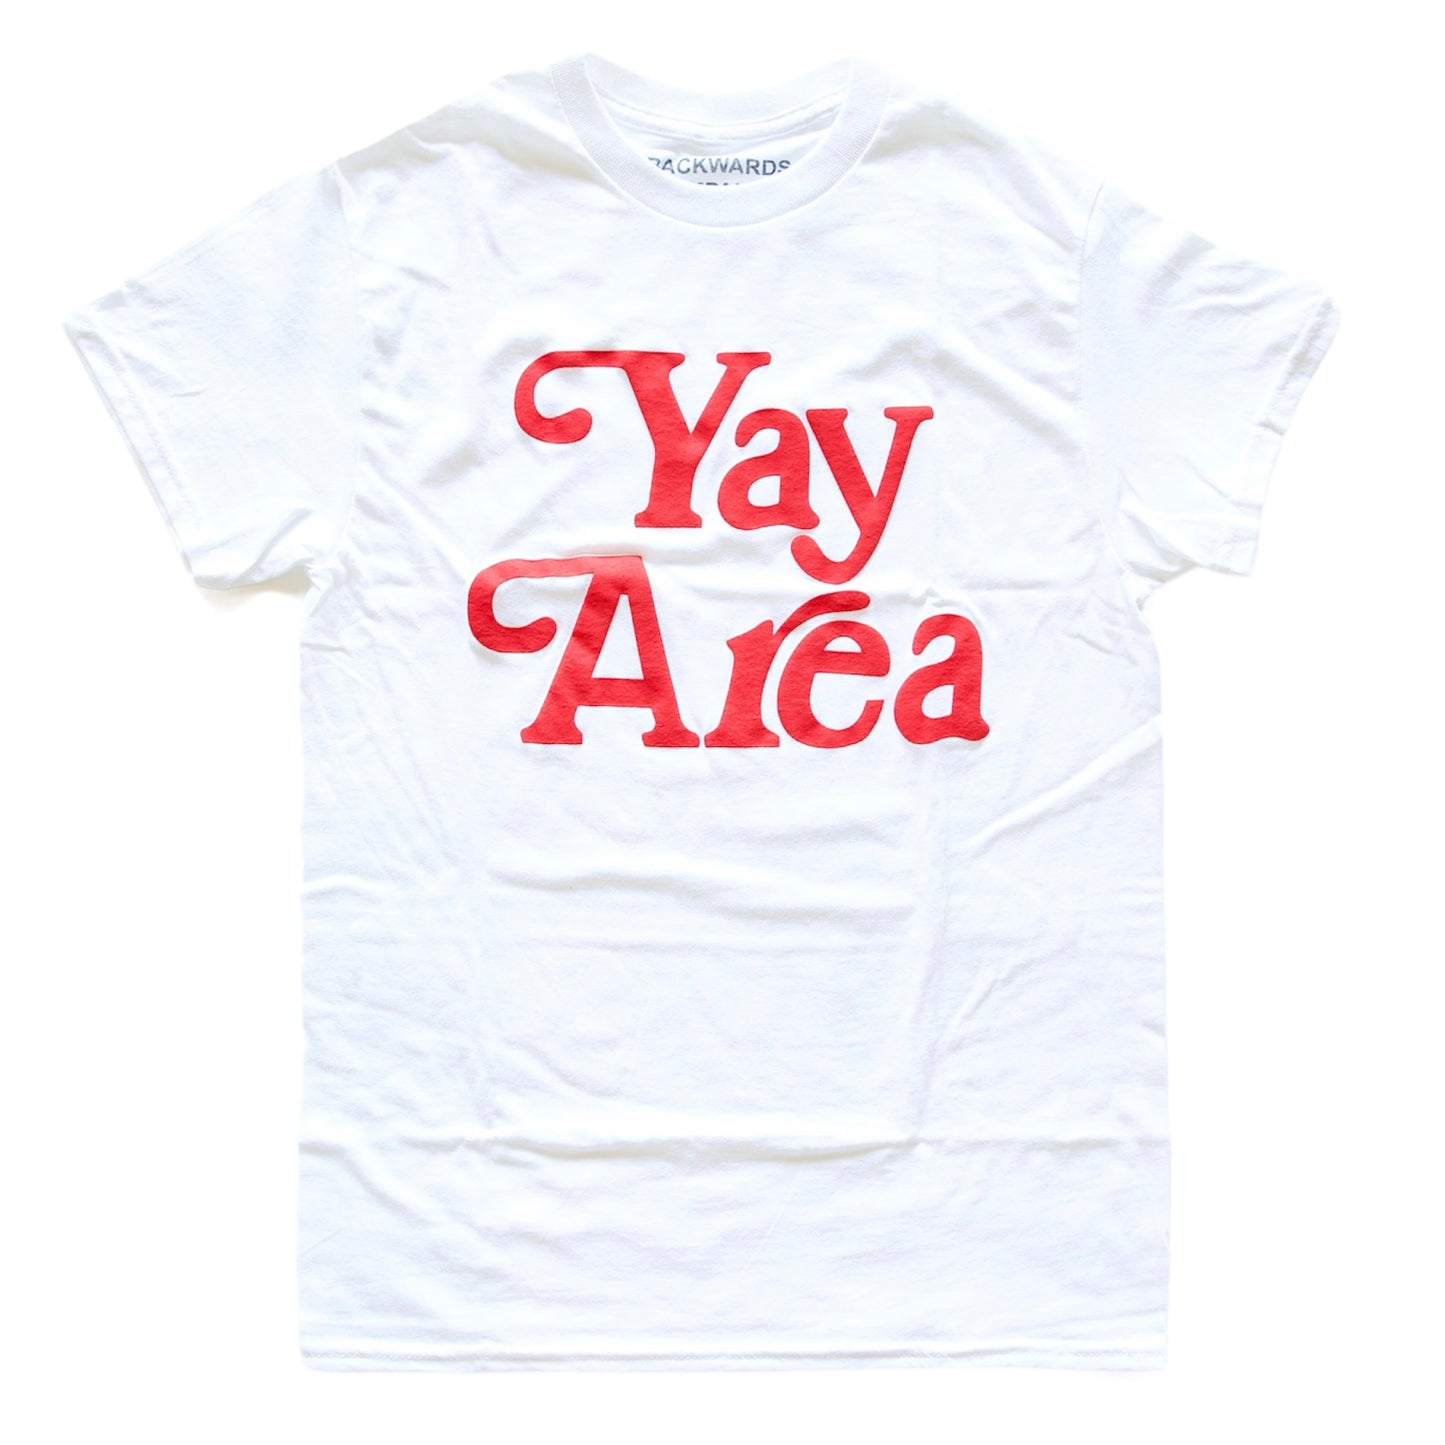 White “Yay Area” T-Shirt